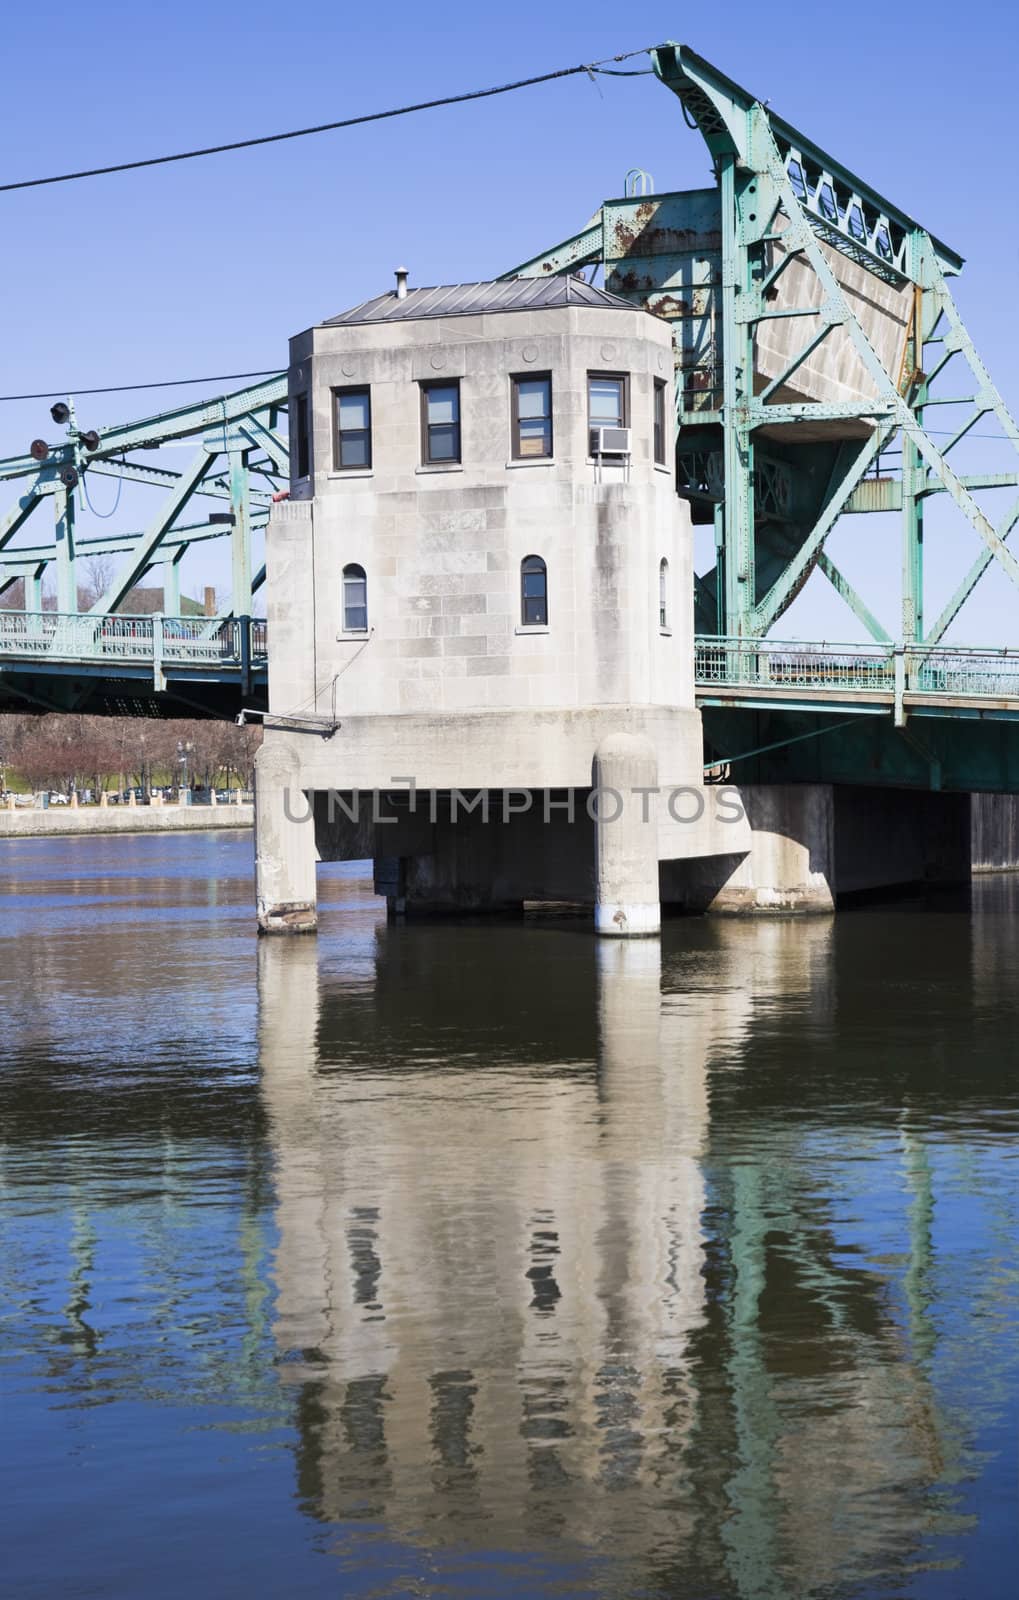 Details of Historic bridge in Joliet, Illinois.